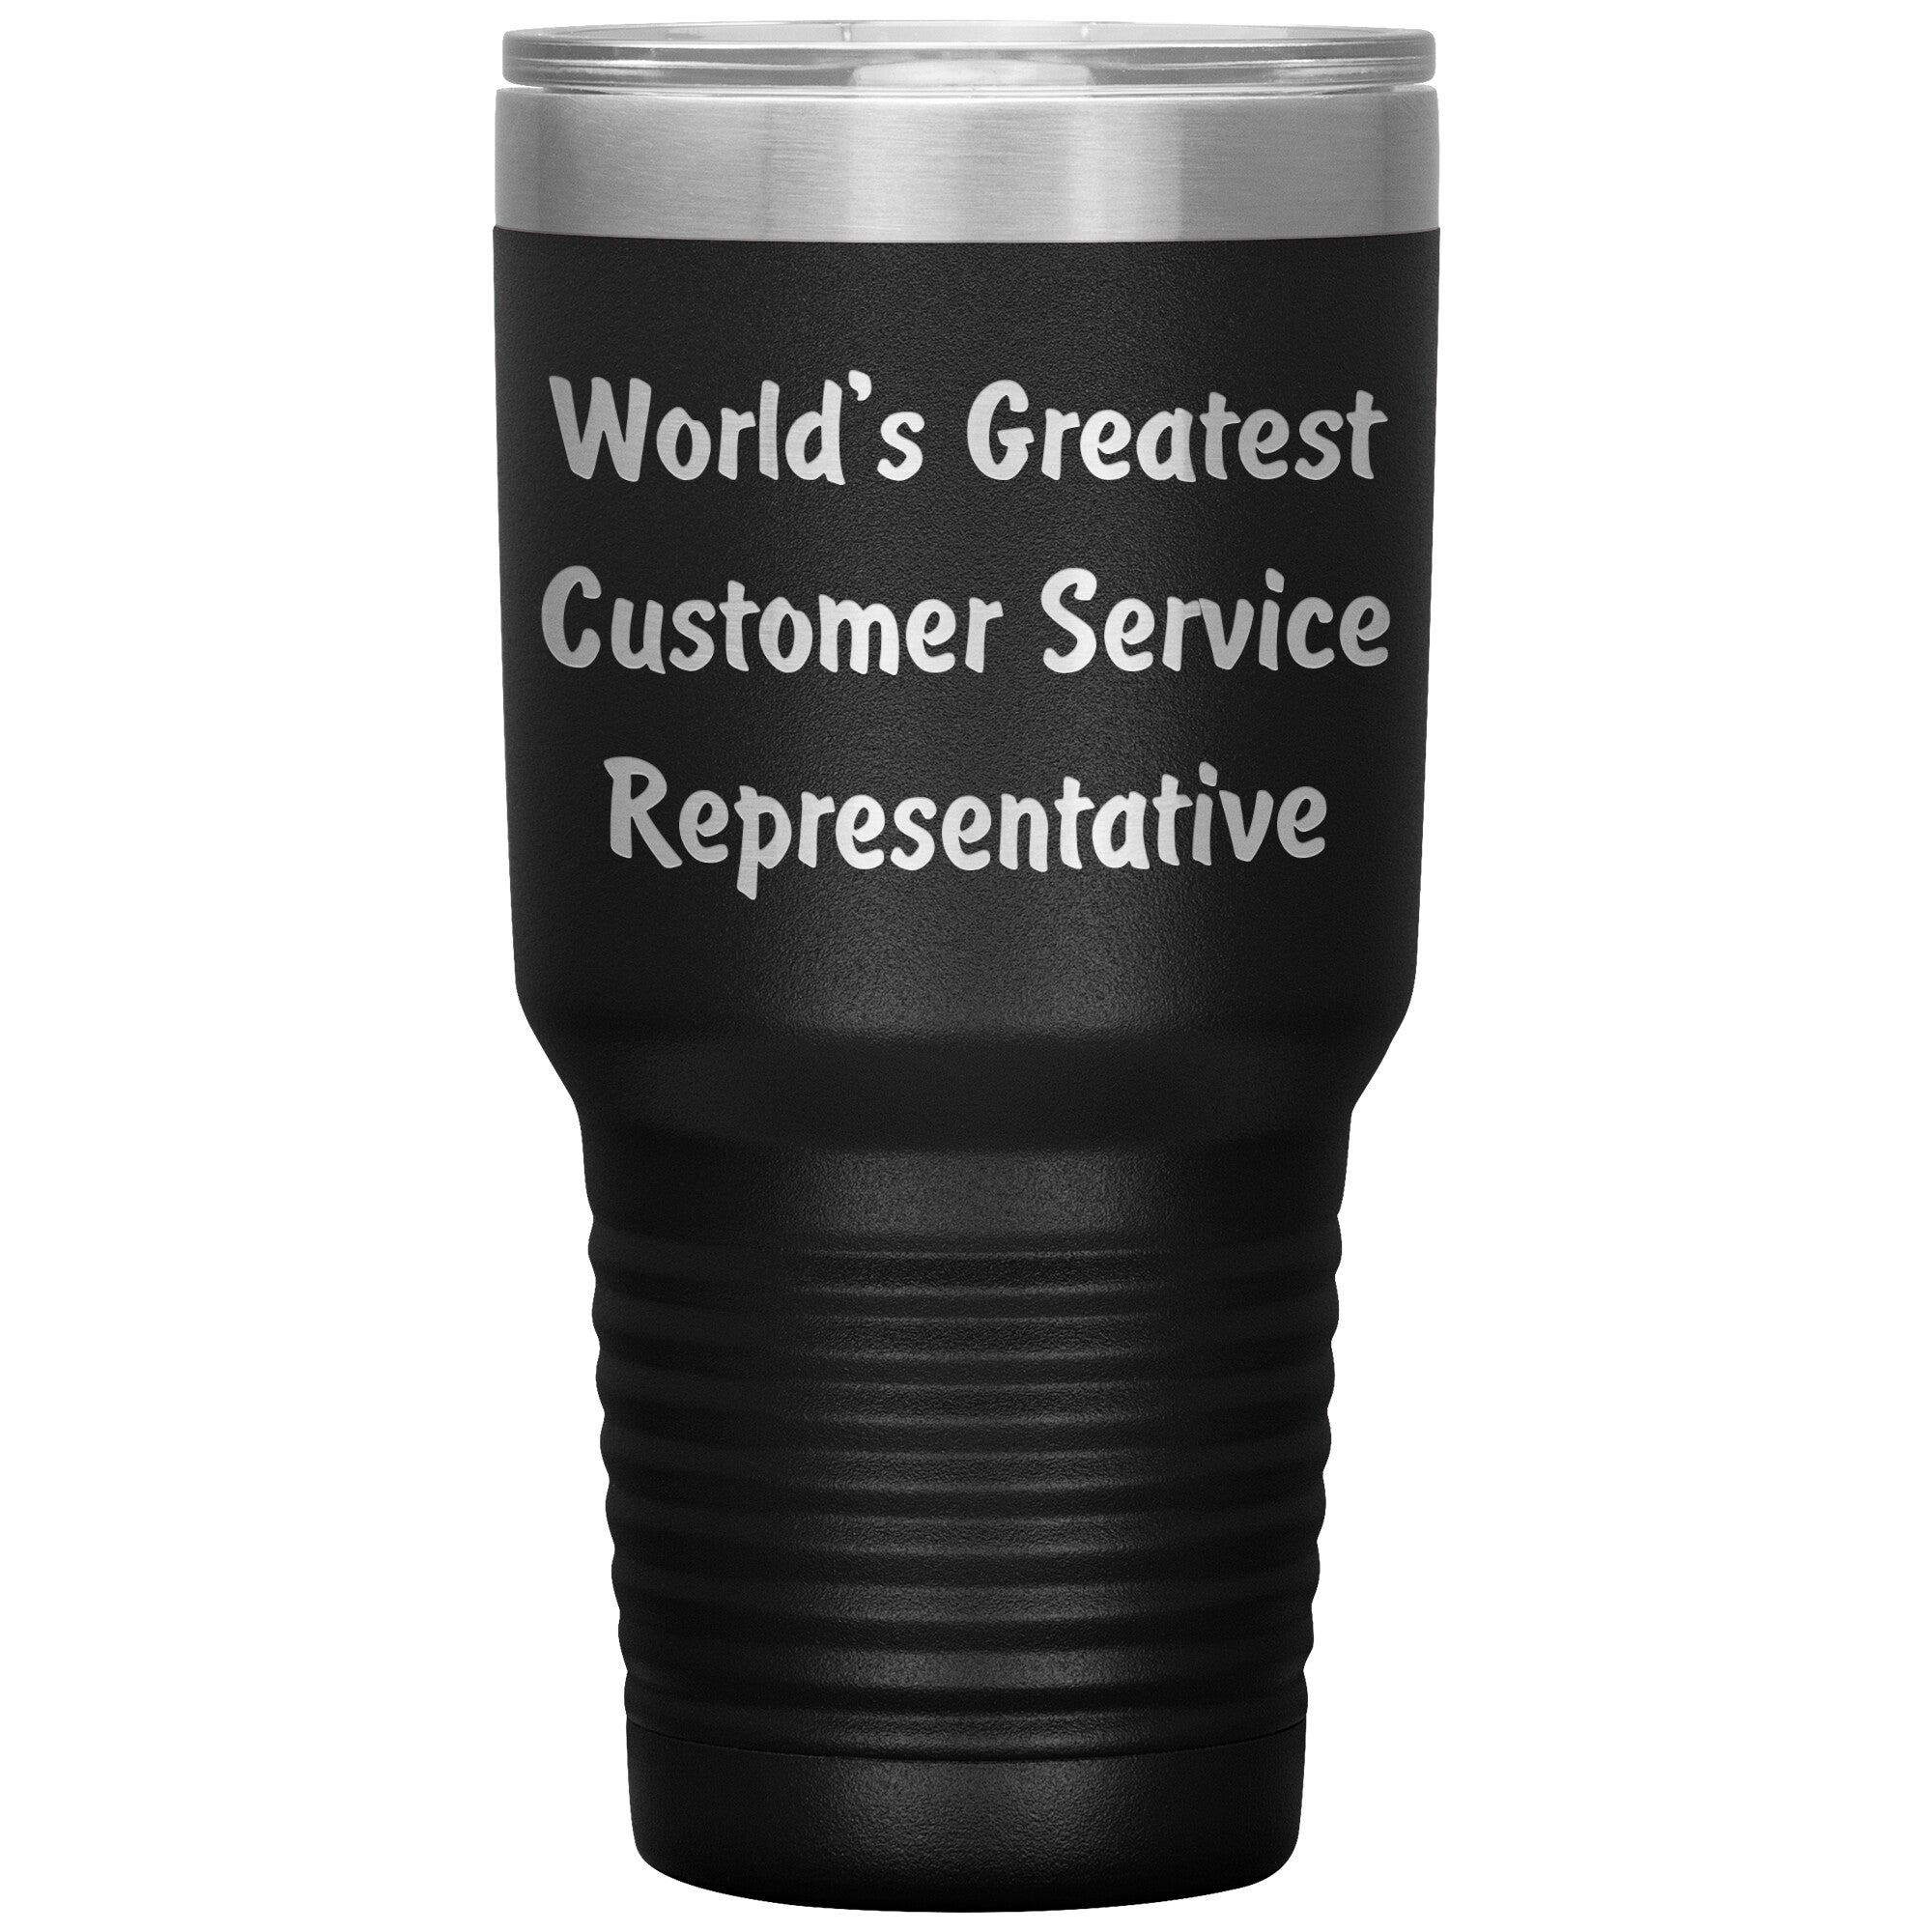 World's Greatest Customer Service Representative - 30oz Insulated Tumbler